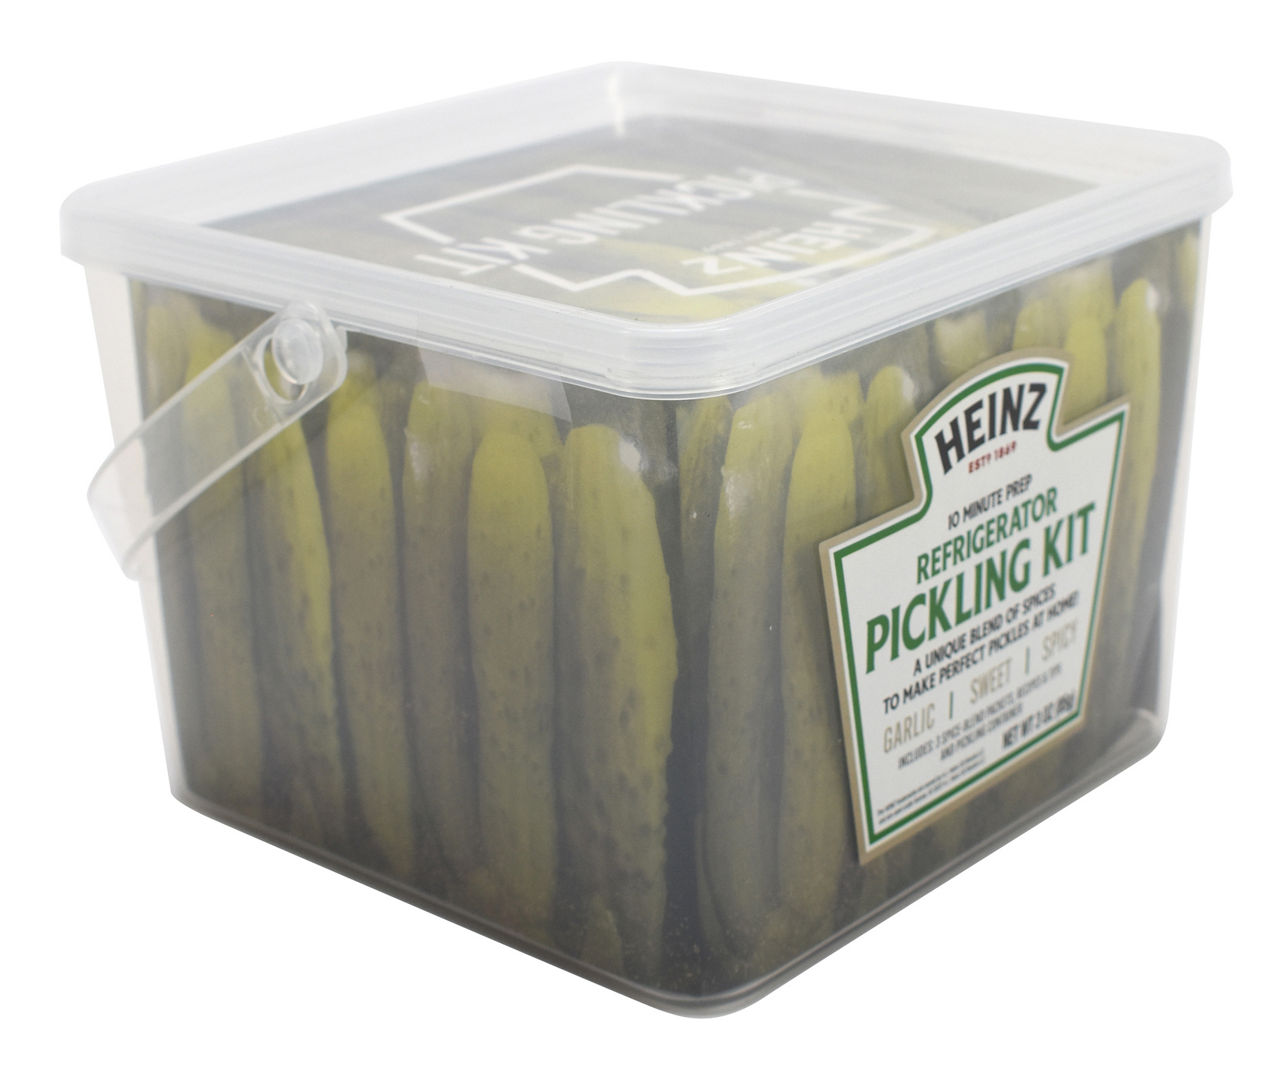 Heinz Refrigerator Pickling Kit